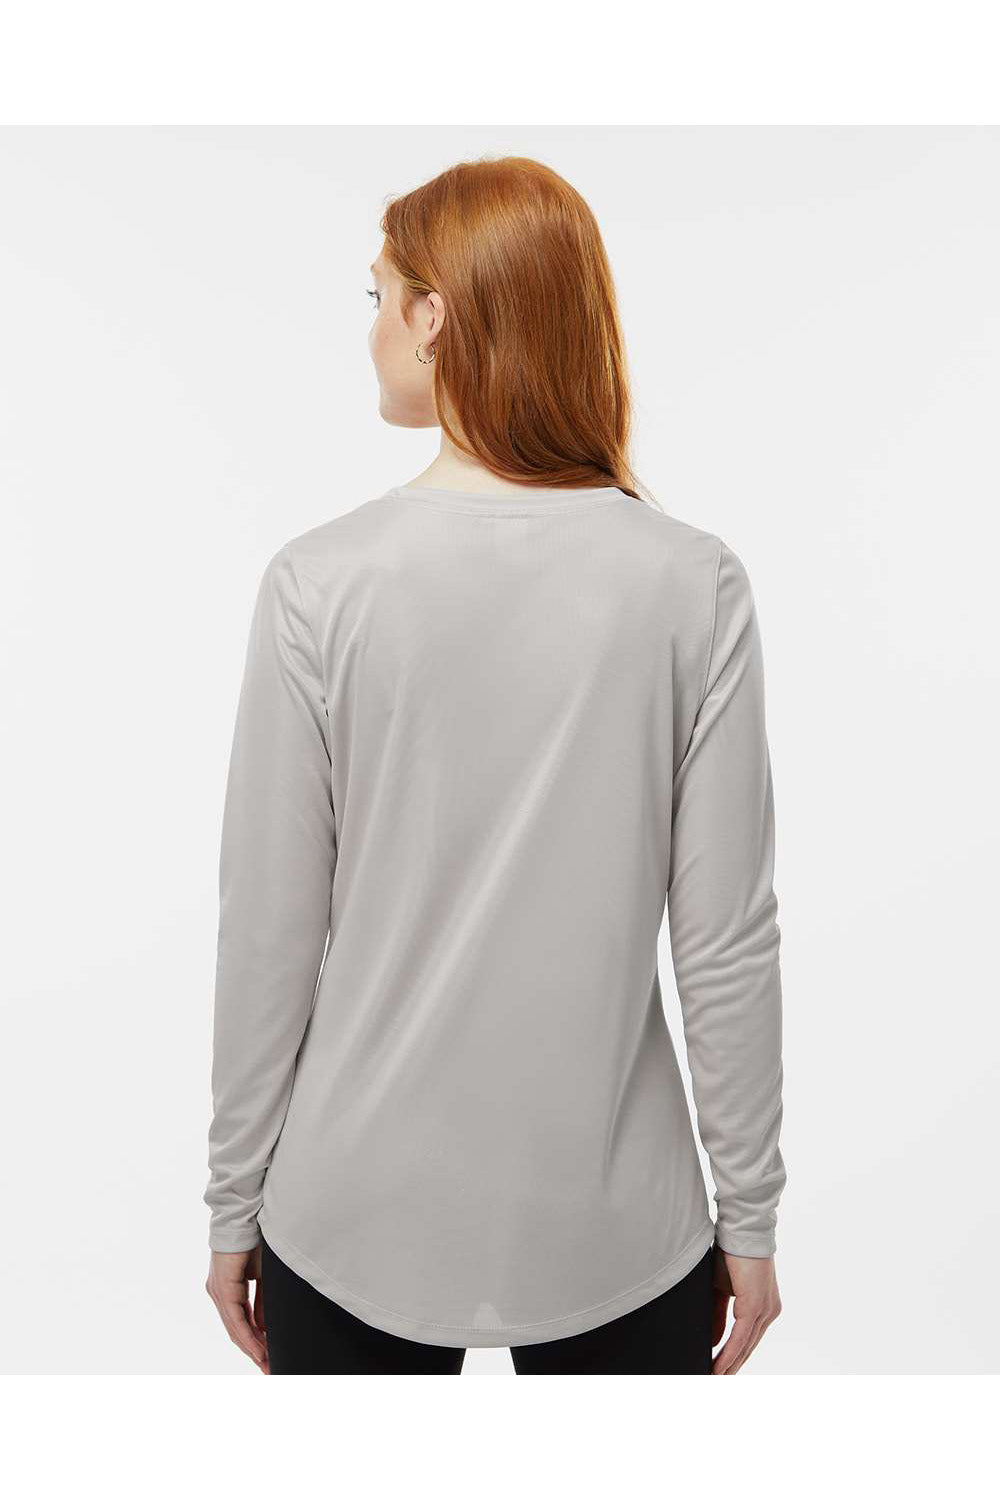 Paragon 214 Womens Islander Performance Long Sleeve Scoop Neck T-Shirt Aluminum Grey Model Back